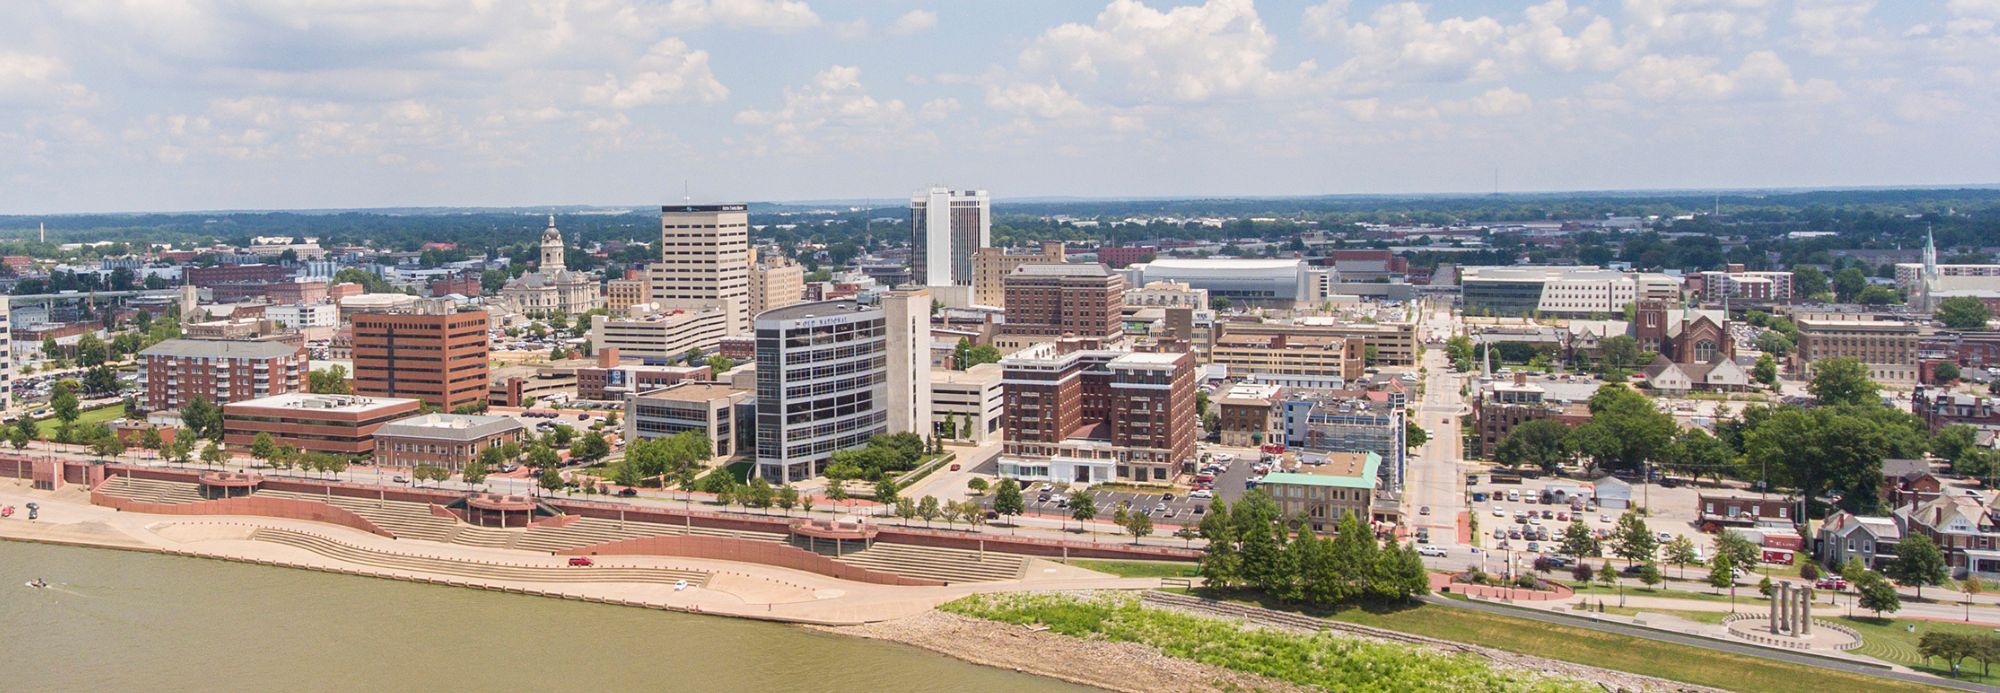 Aerial shot of the Evansville Riverfront.                     